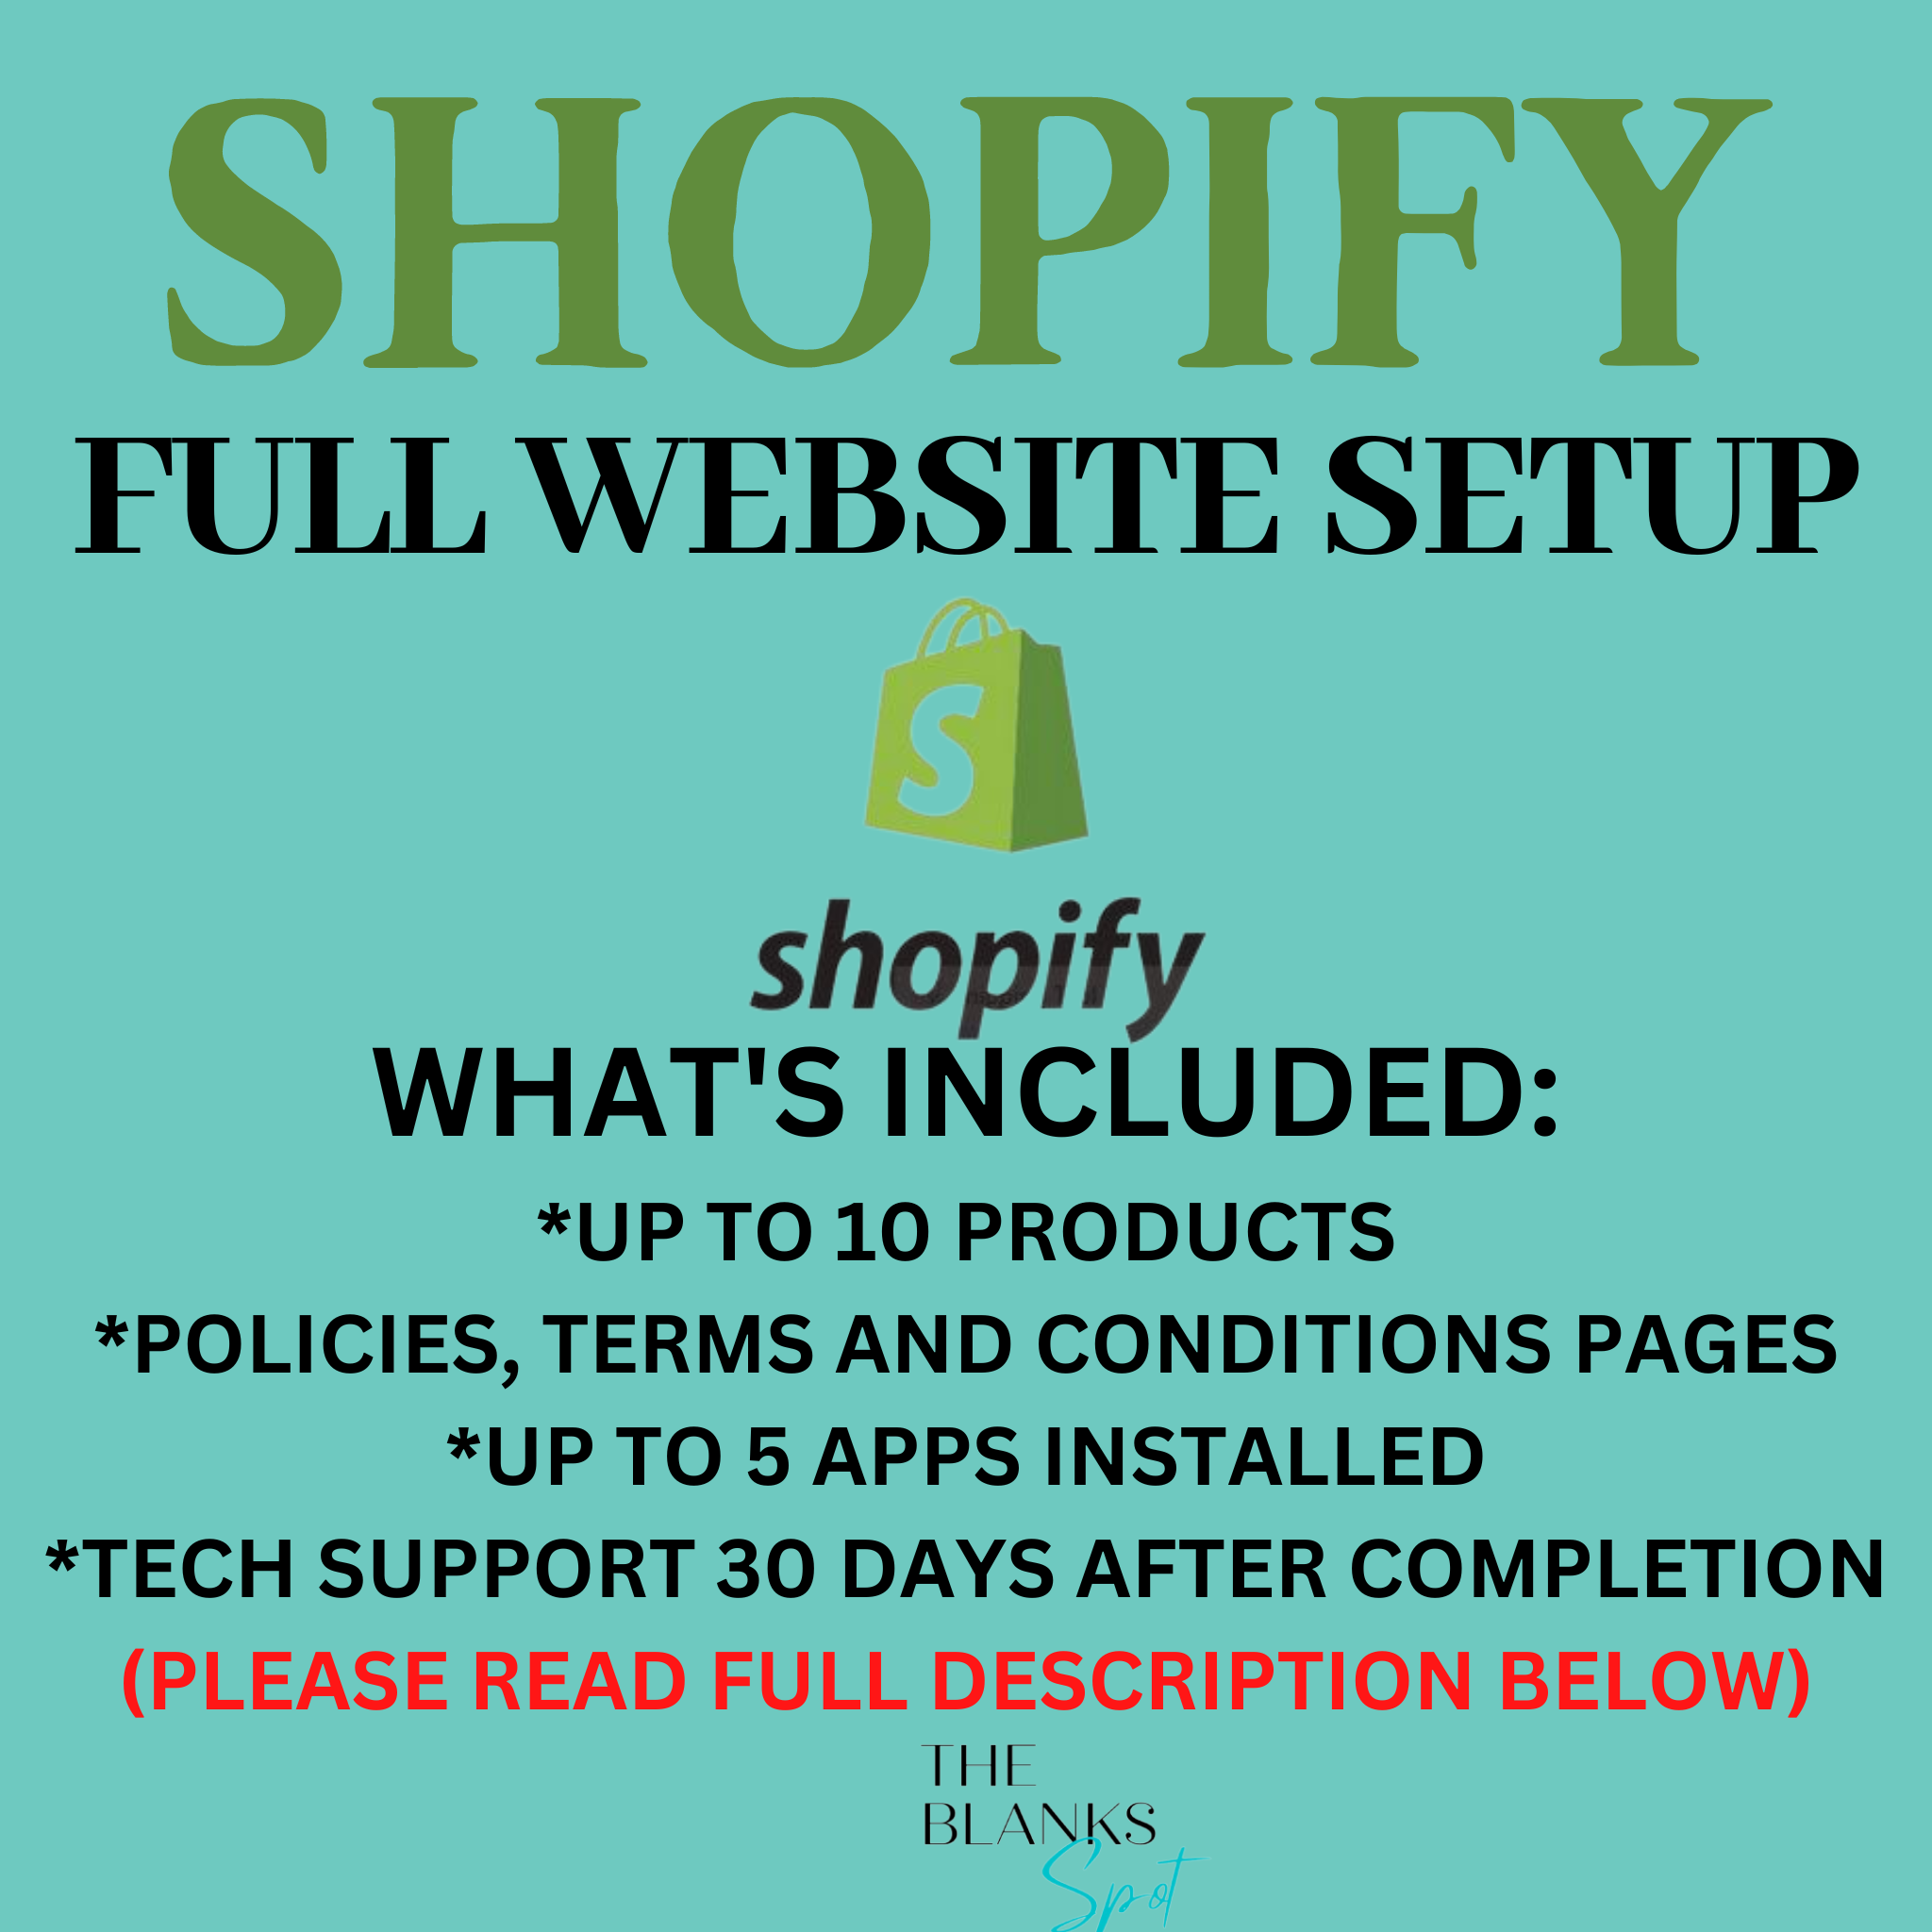 SHOPIFY FULL WEBSITE SETUP (PLEASE READ ENTIRE DESCRIPTION BELOW)